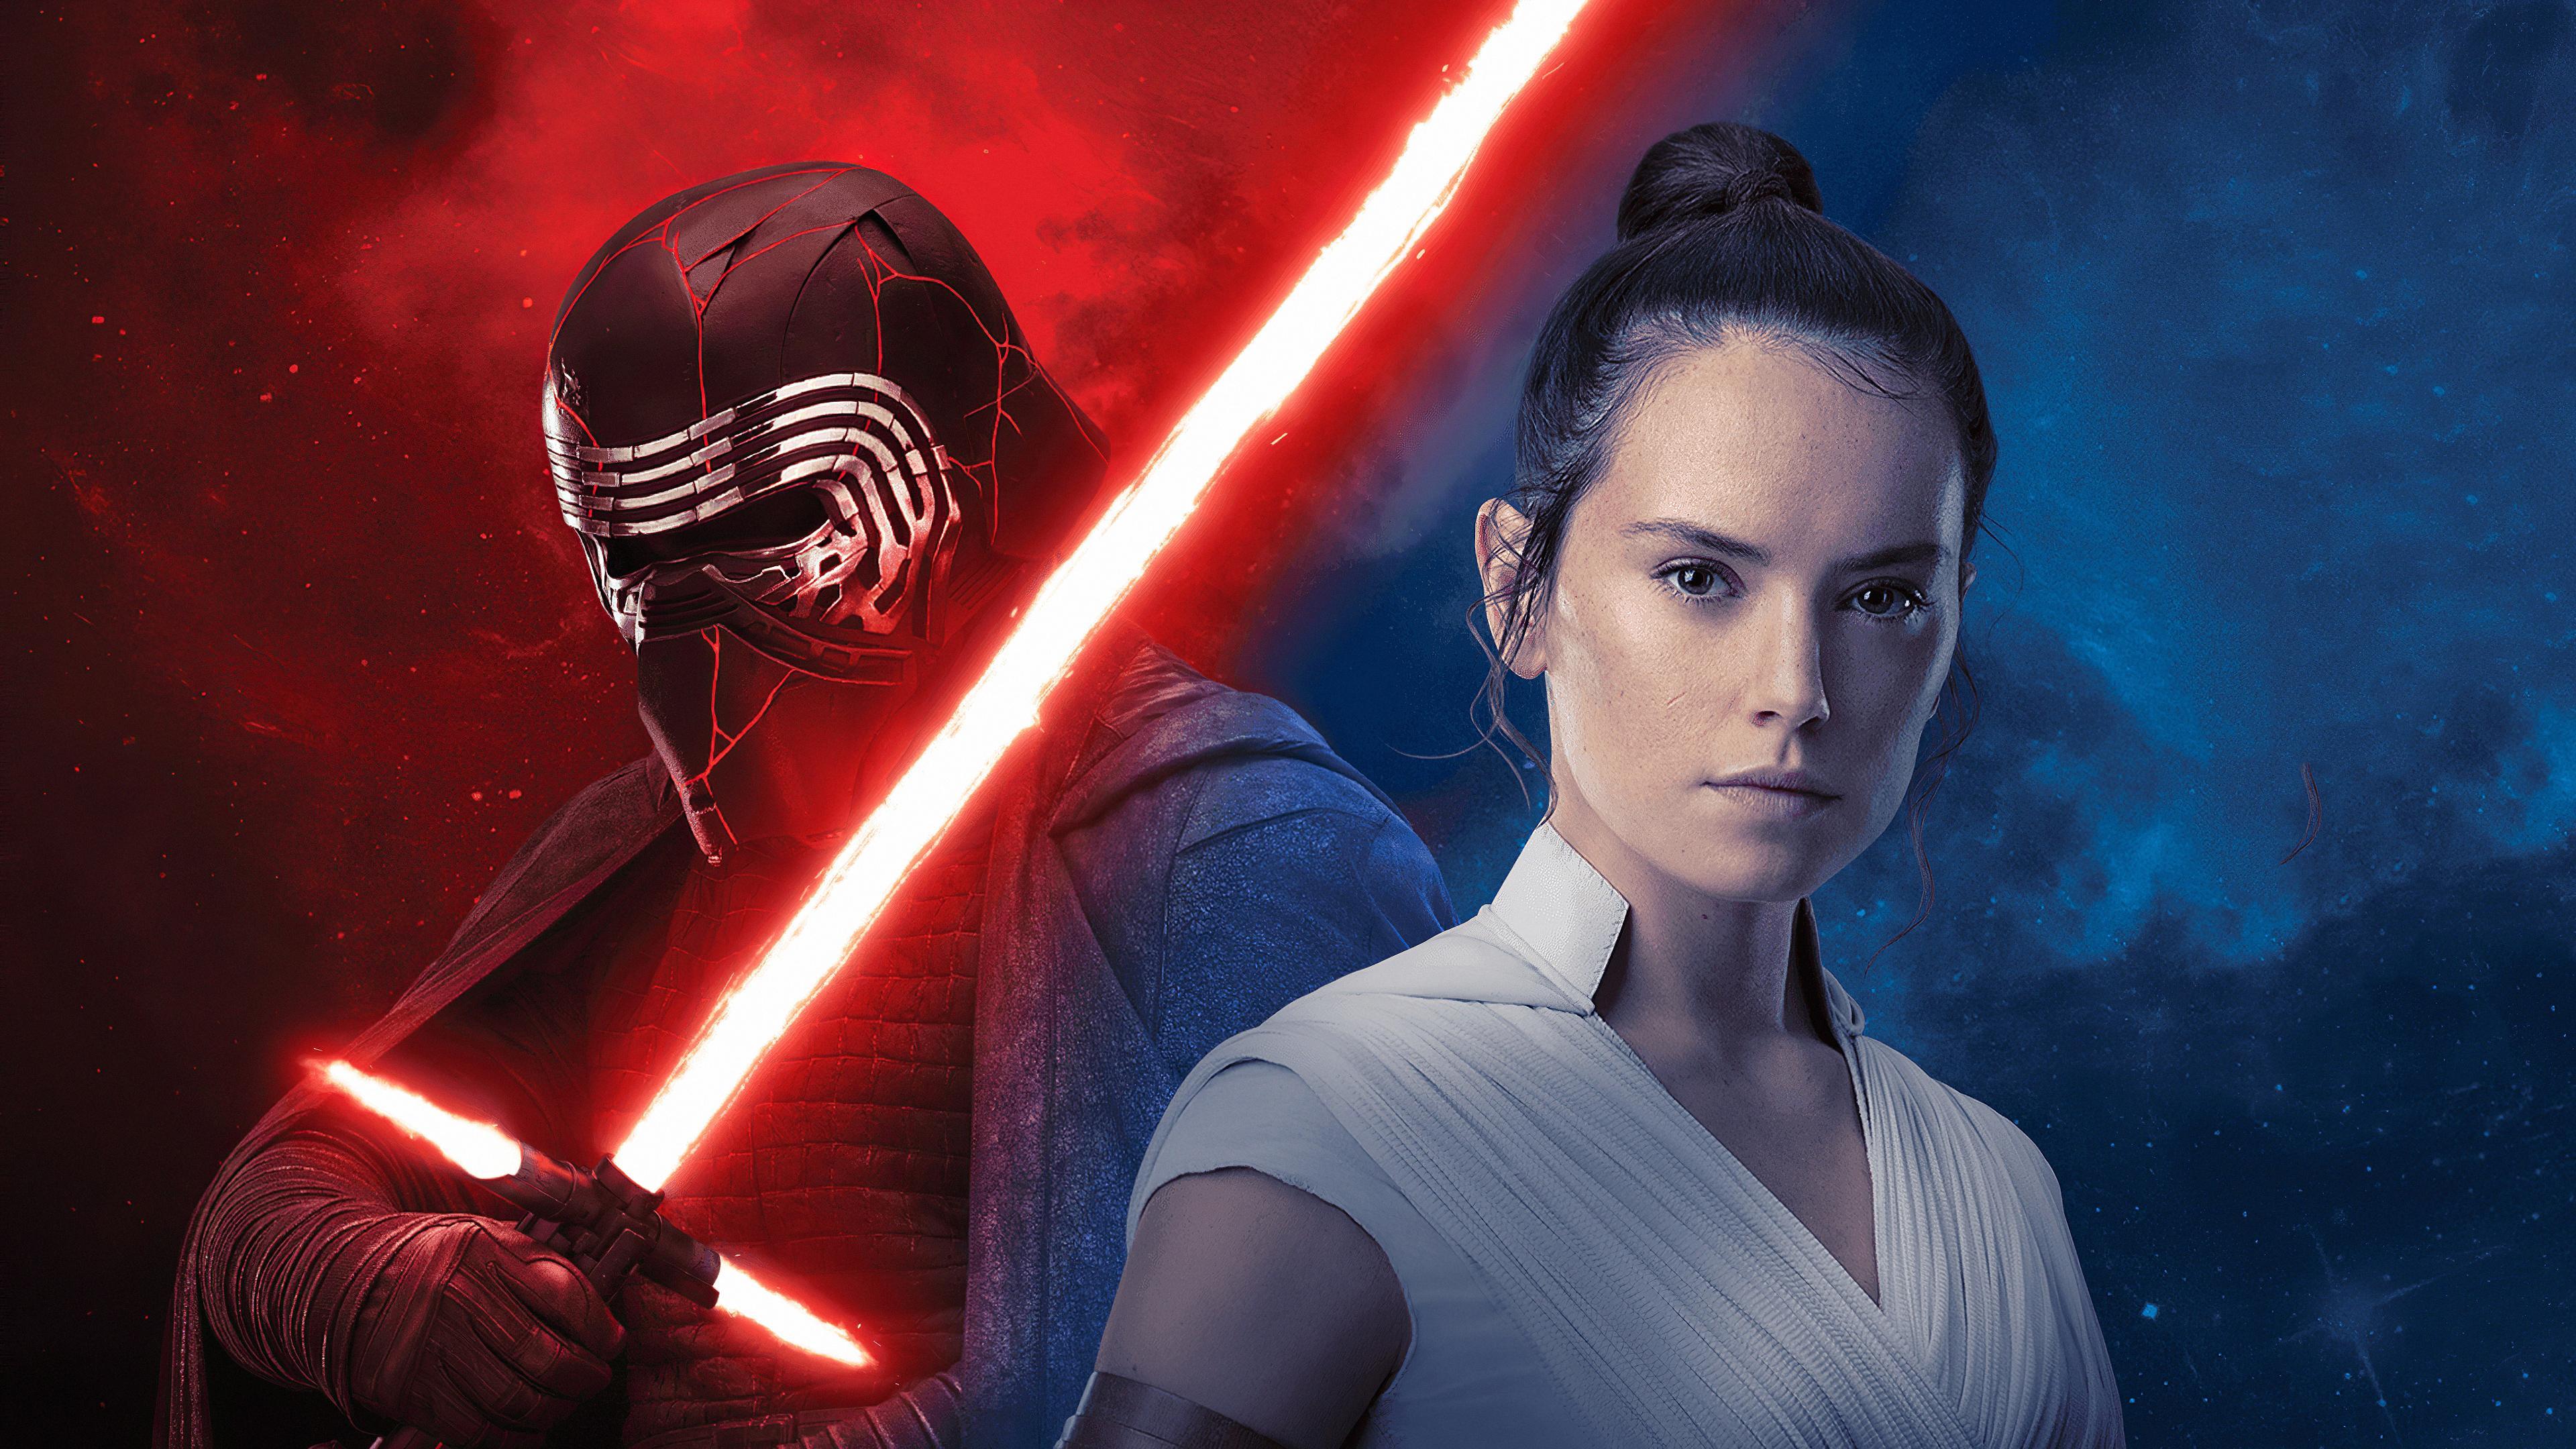 Star Wars: The Rise of Skywalker 4k Ultra HD Wallpapers.